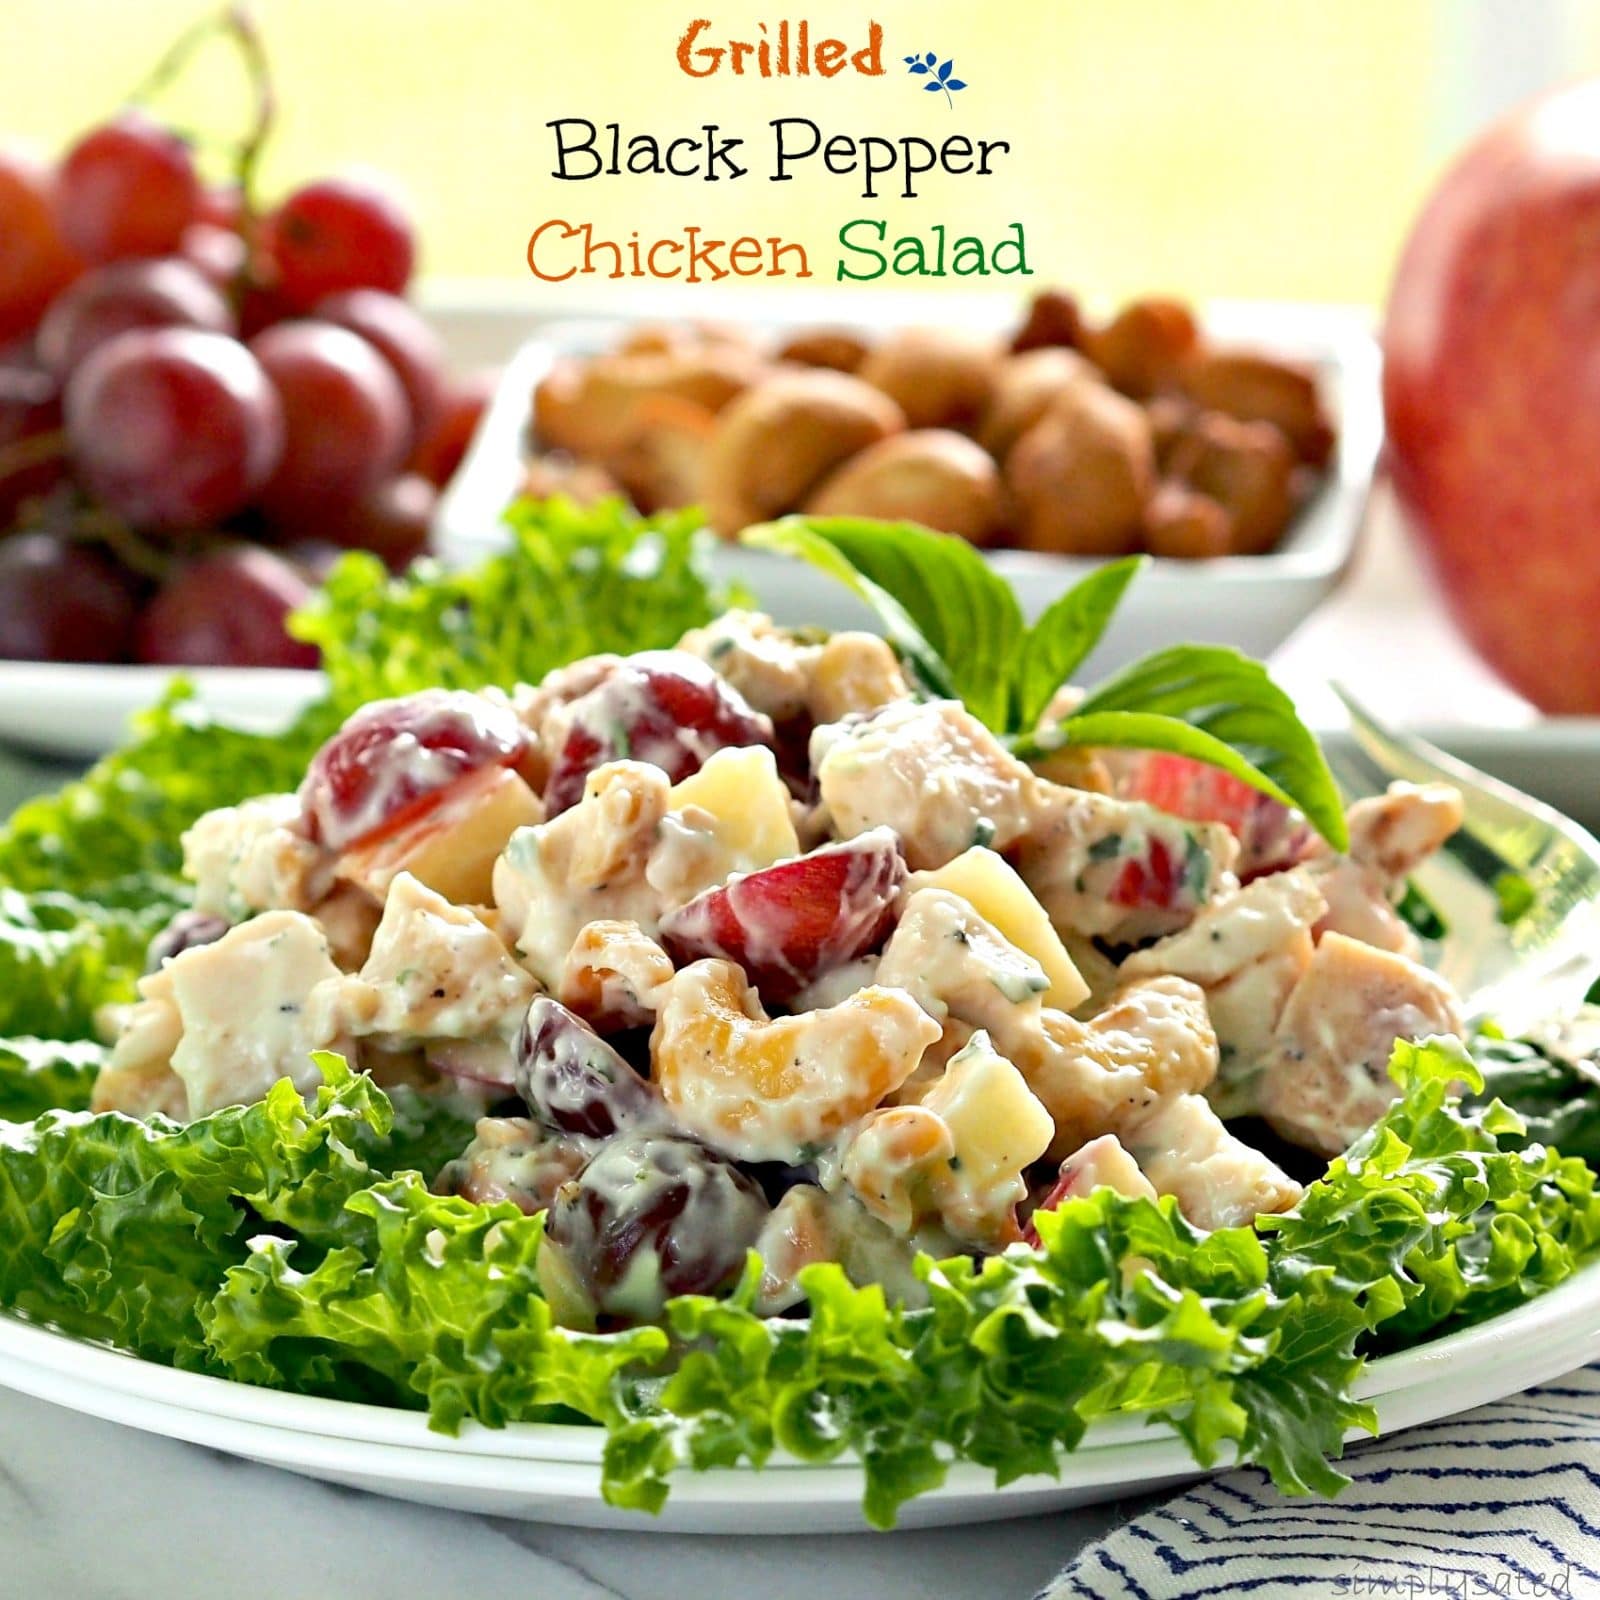 Grilled Black Pepper Chicken Salad